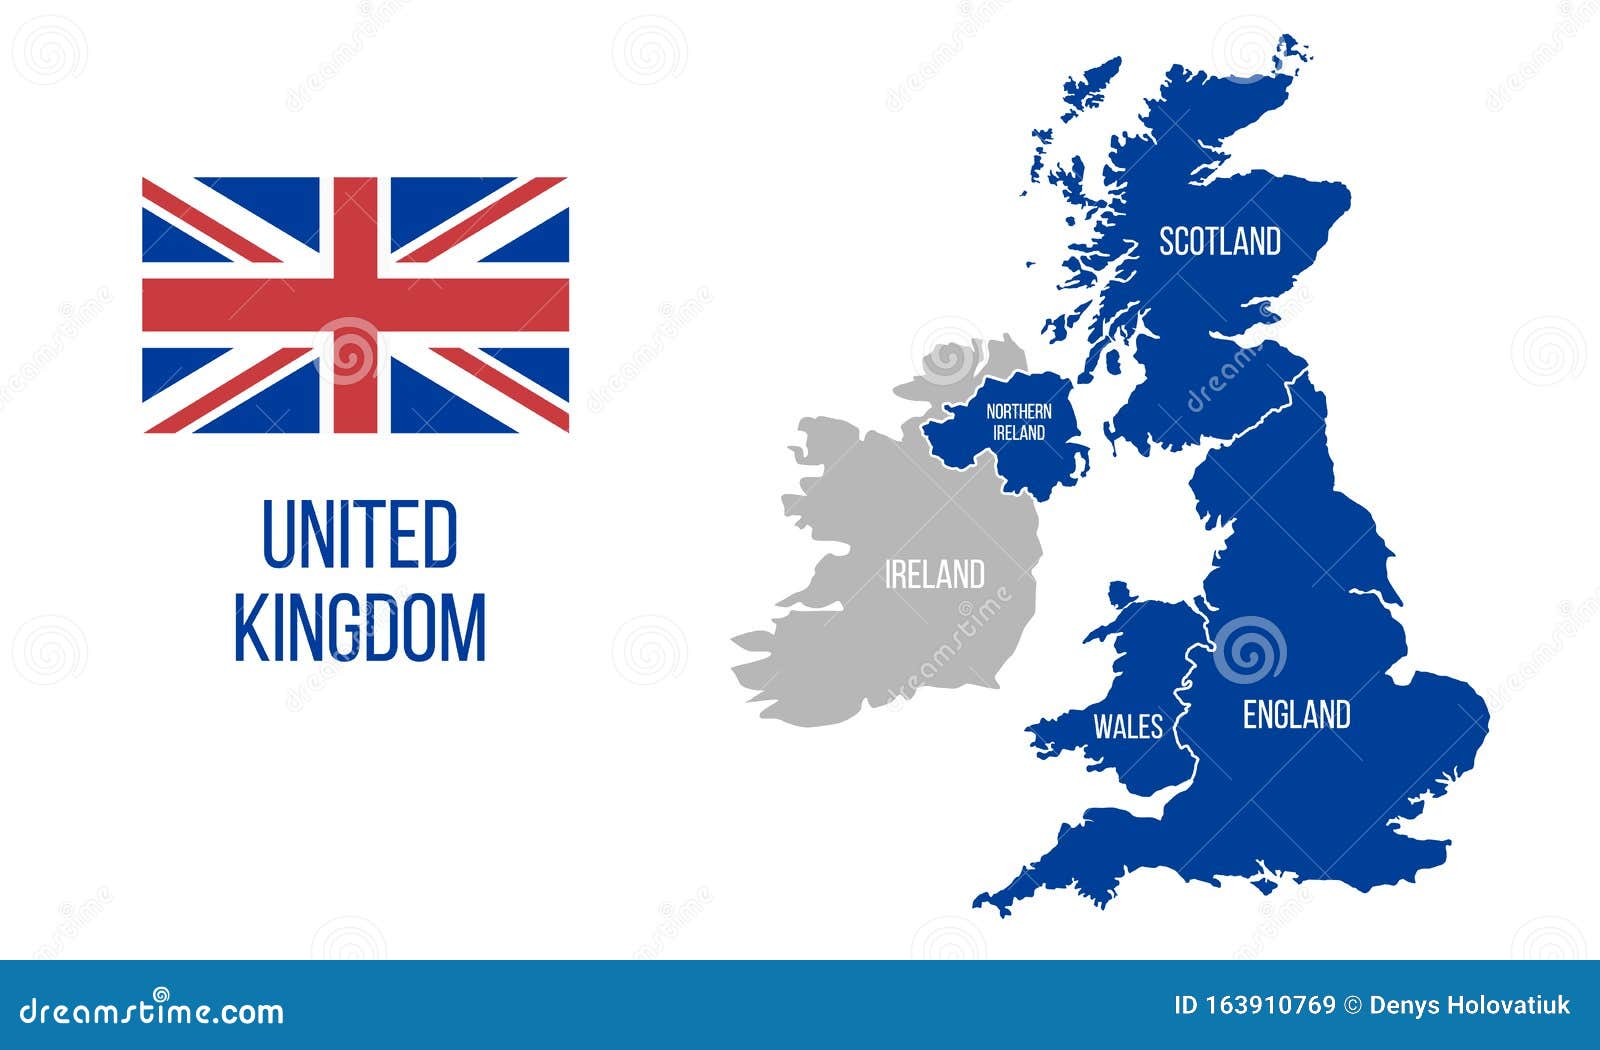 united kingdom map. england, scotland, wales, northern ireland.  great britain map wit uk flag  on white background.